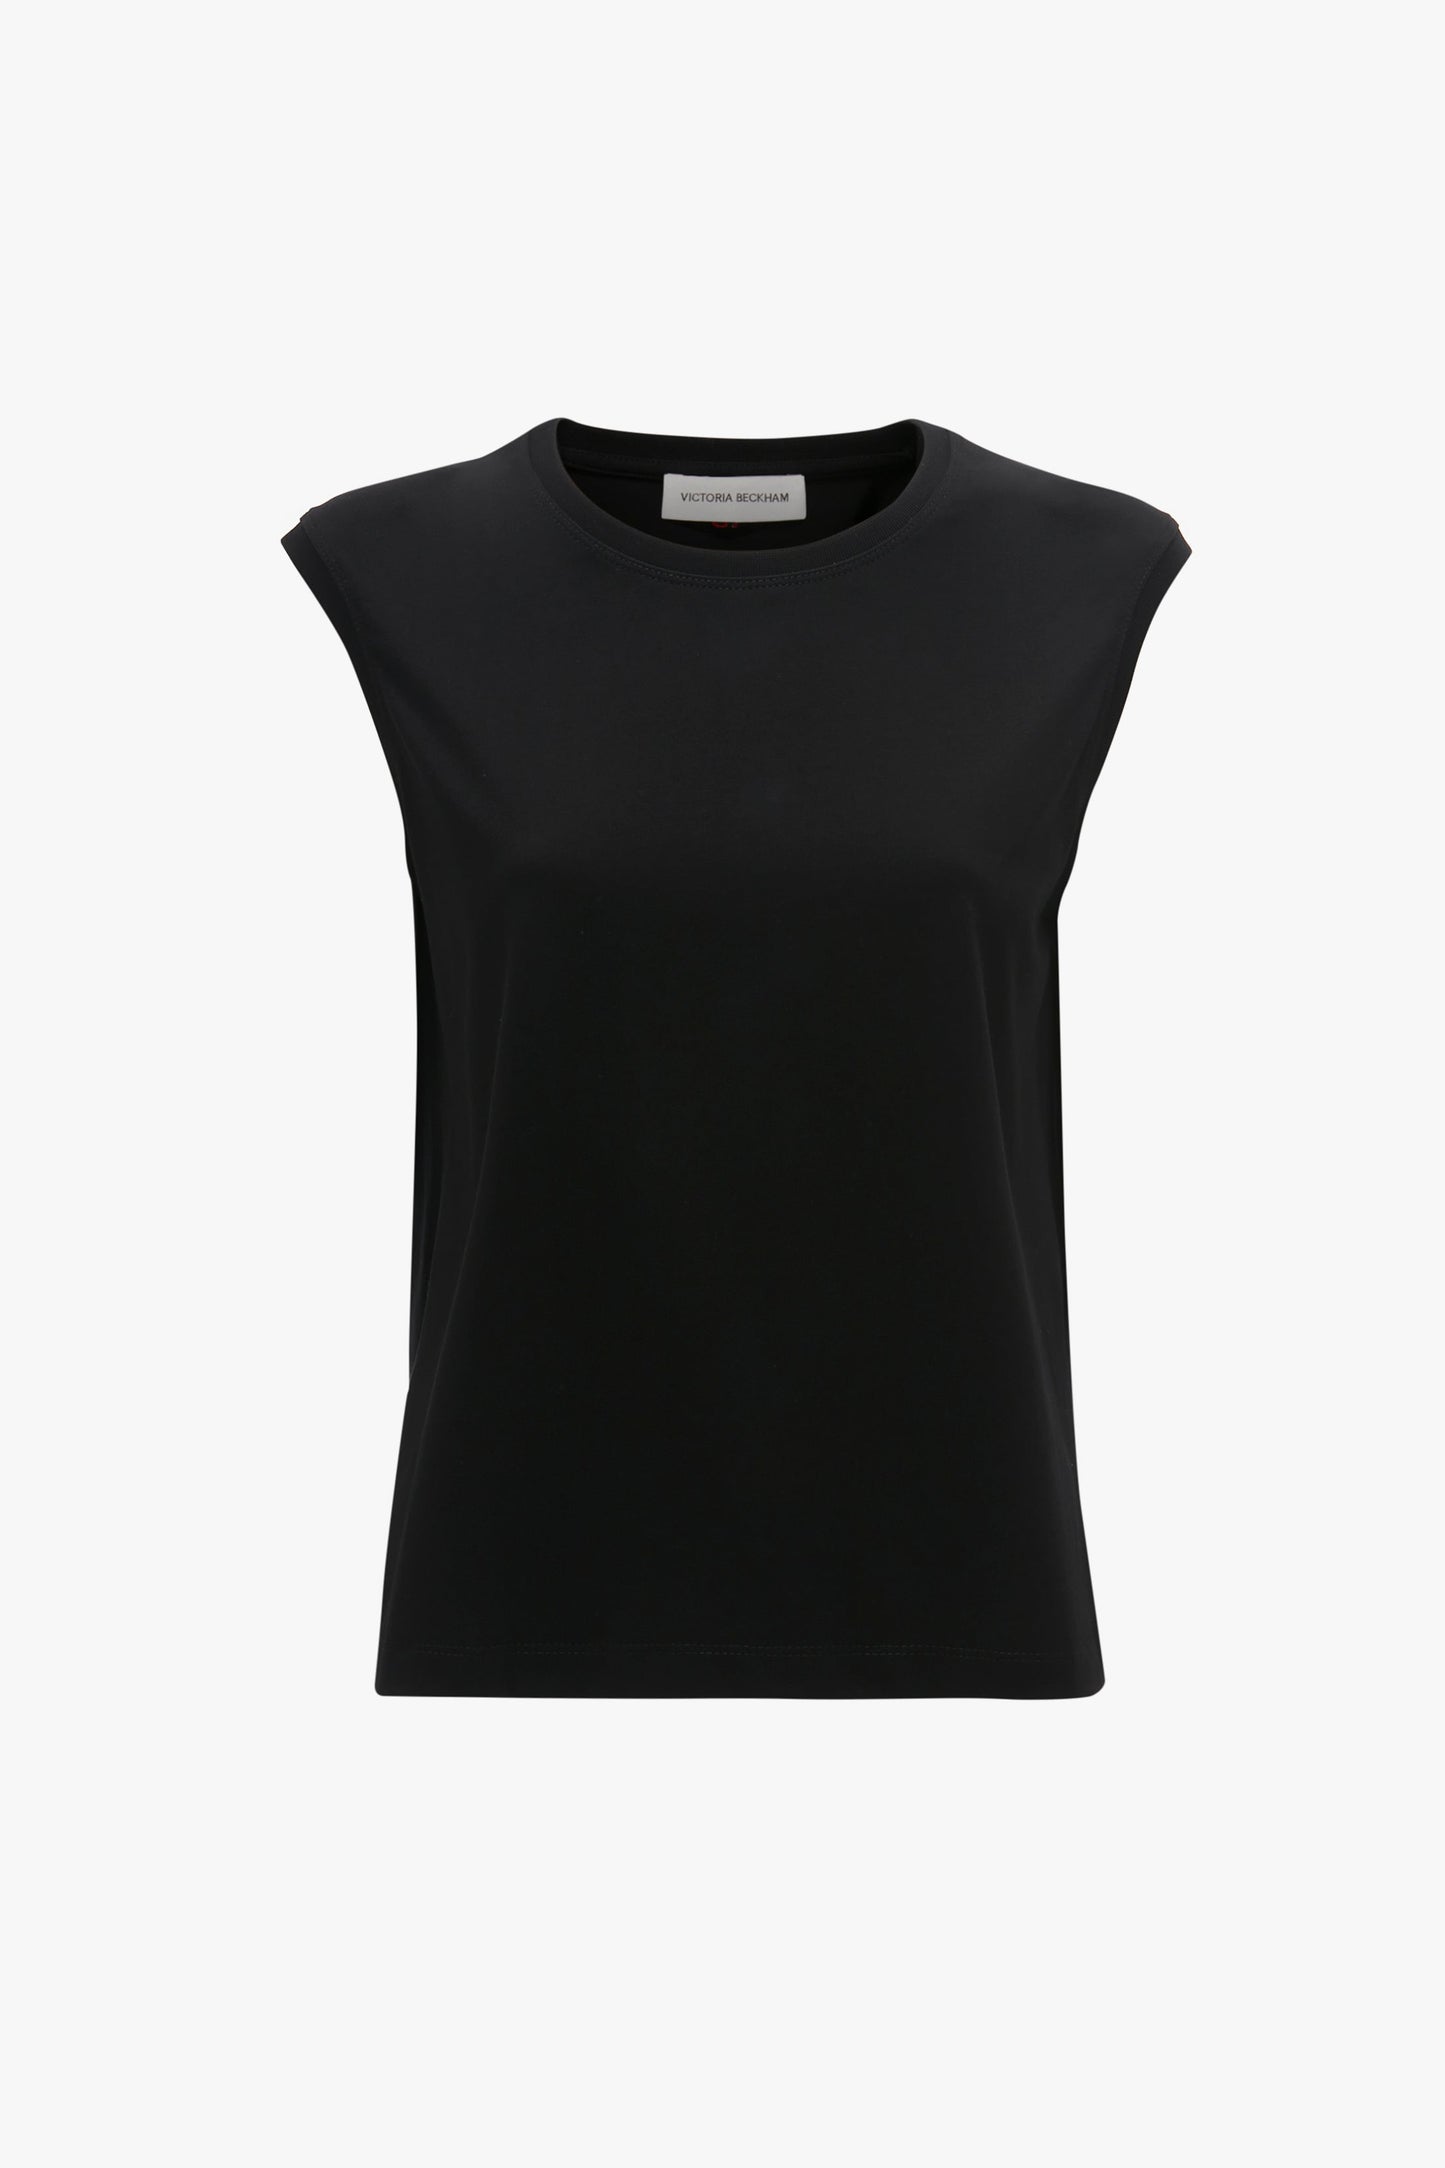 Sleeveless T-Shirt In Black